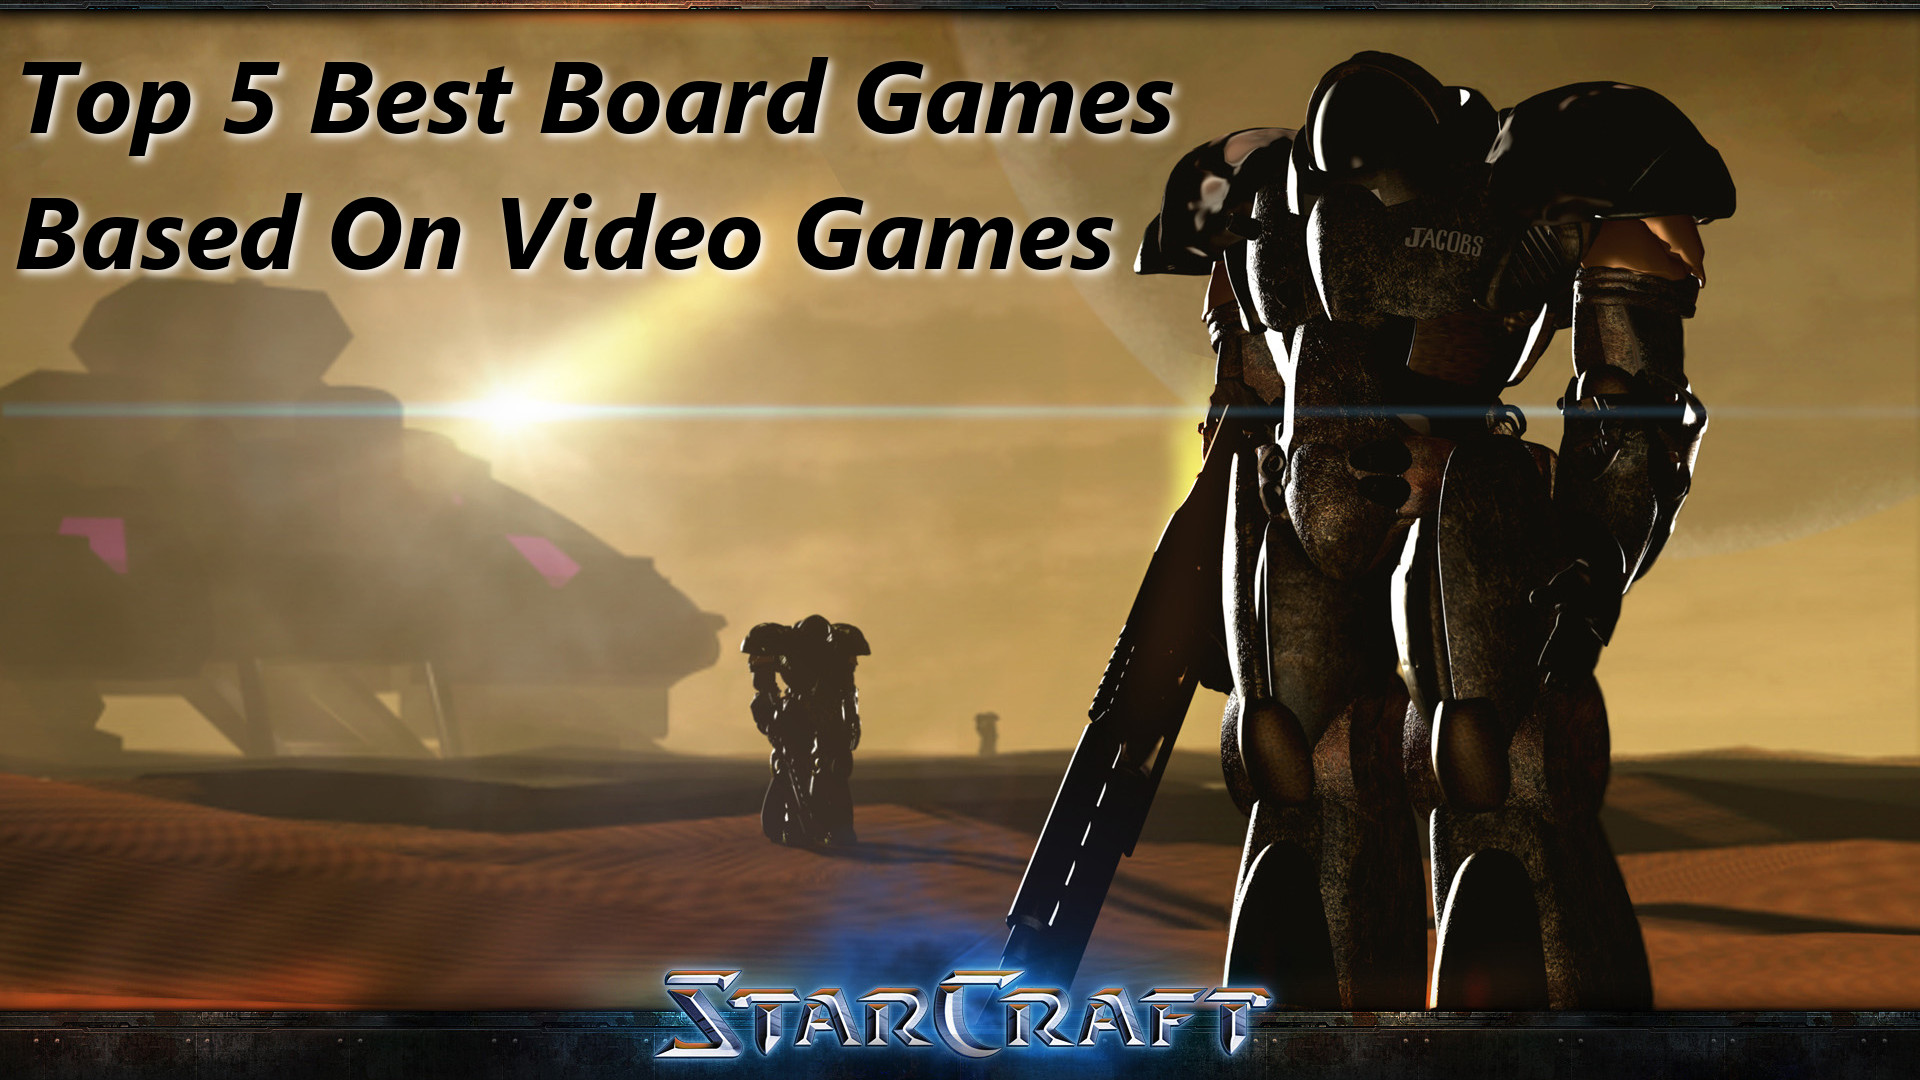 Top 5 Best Board Games Based On Video Games